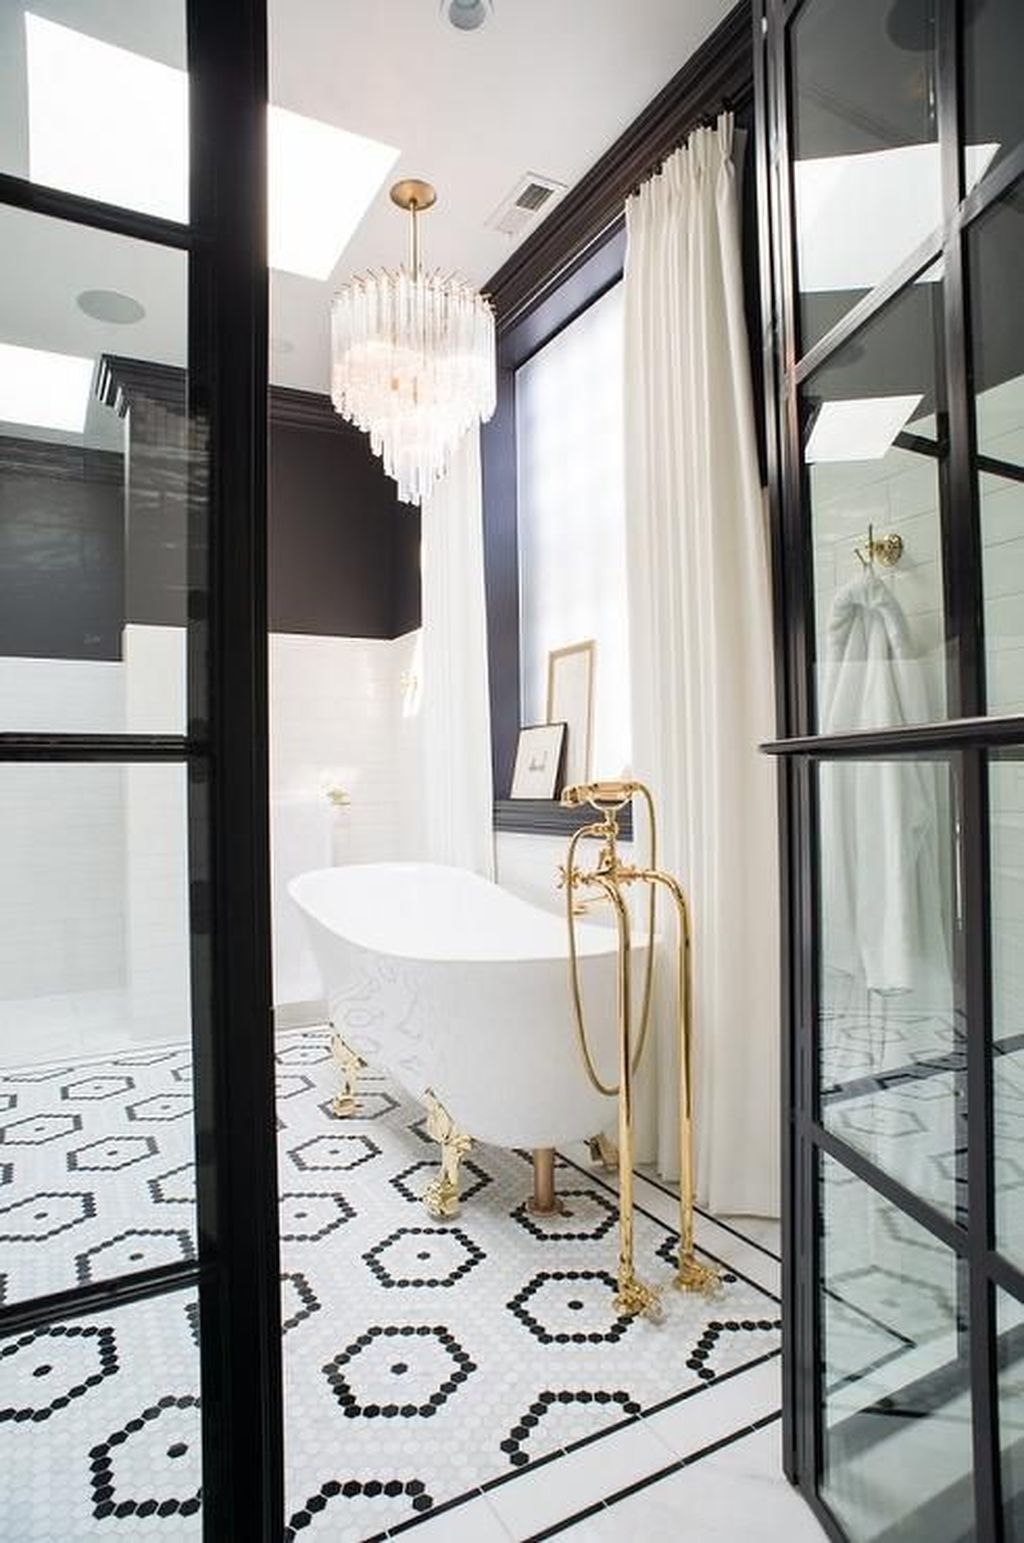 34 Popular Contemporary Bathroom Design Ideas - PIMPHOMEE